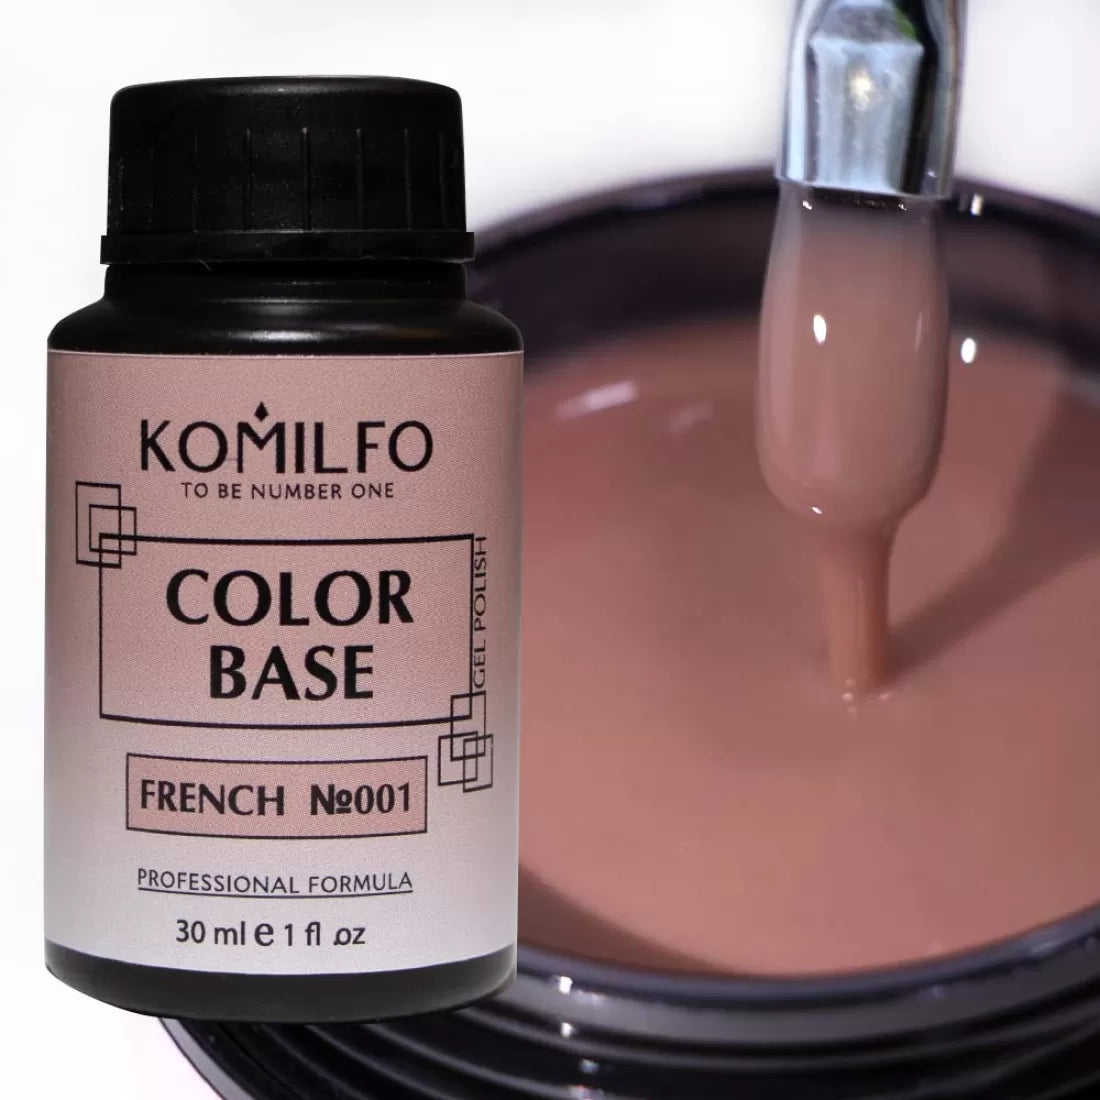 Komilfo Color Base French N001 30ml Barrel